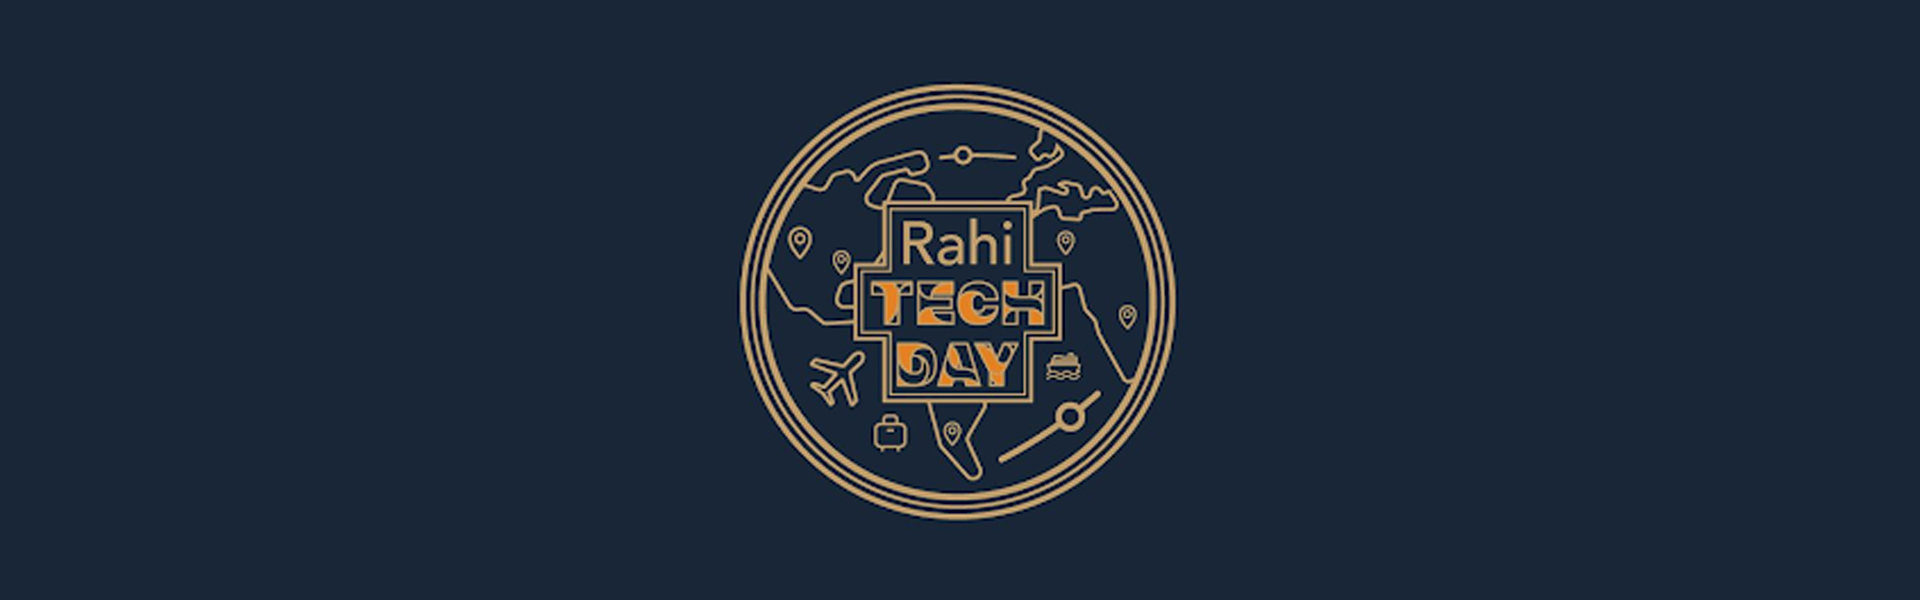 2021 Rahi Tech Day